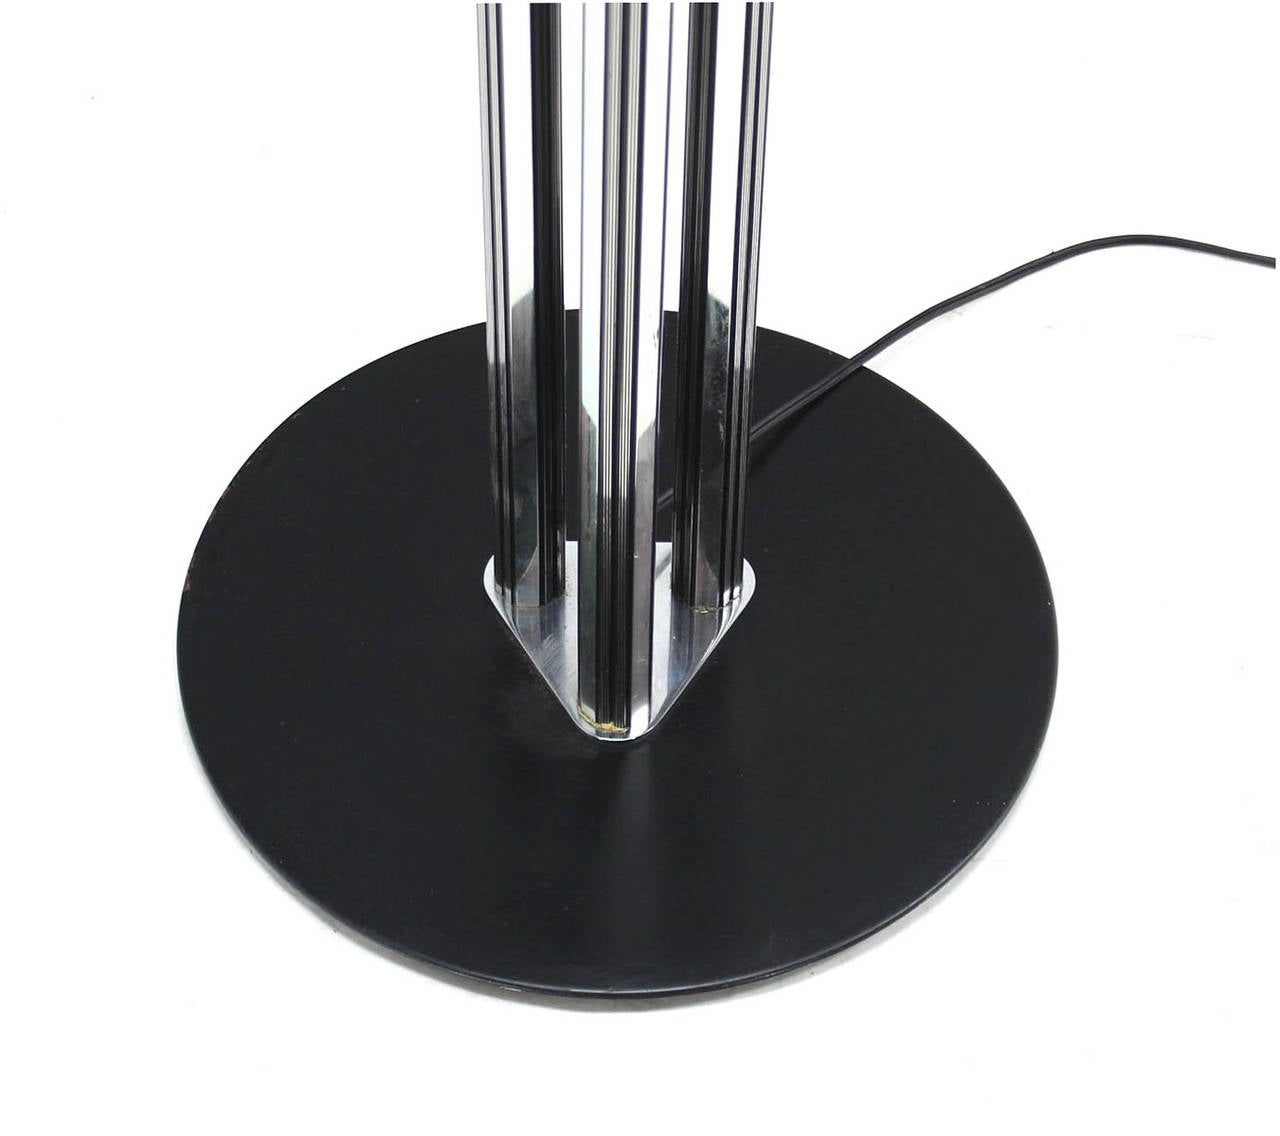 Adjustable Tilt Head Shade Mid Century Modern Floor Lamp with Dimmer